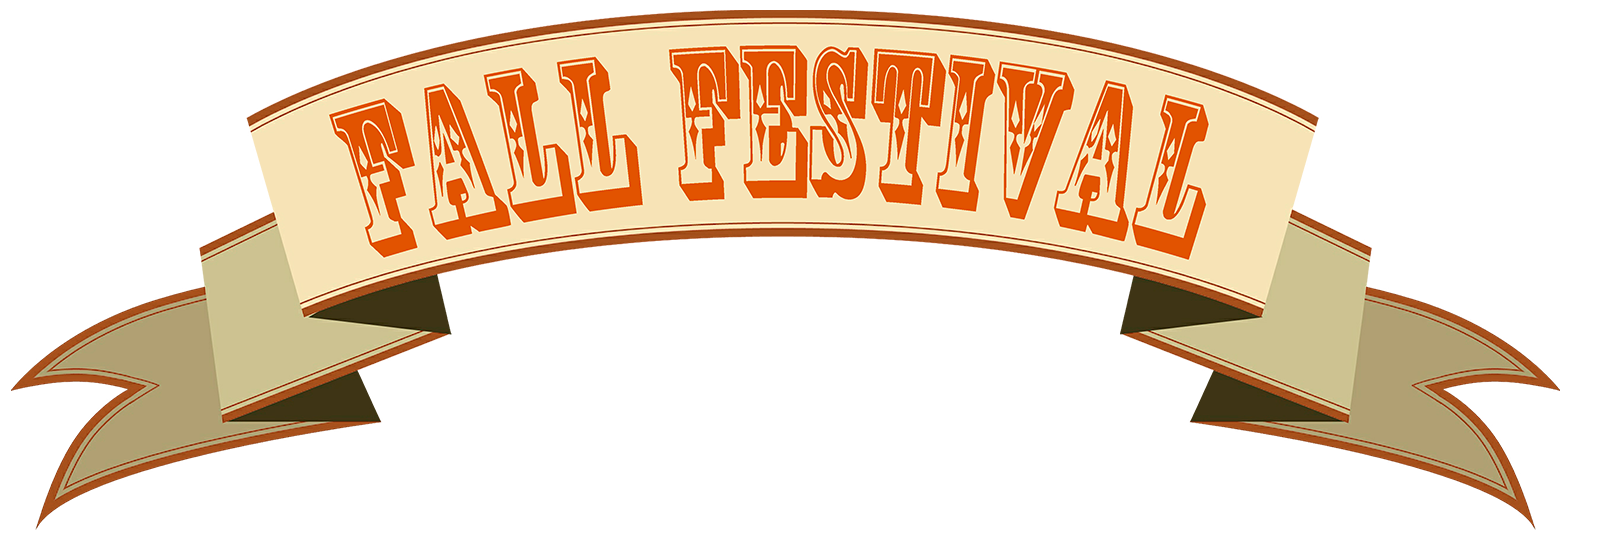 festival clipart fun banner